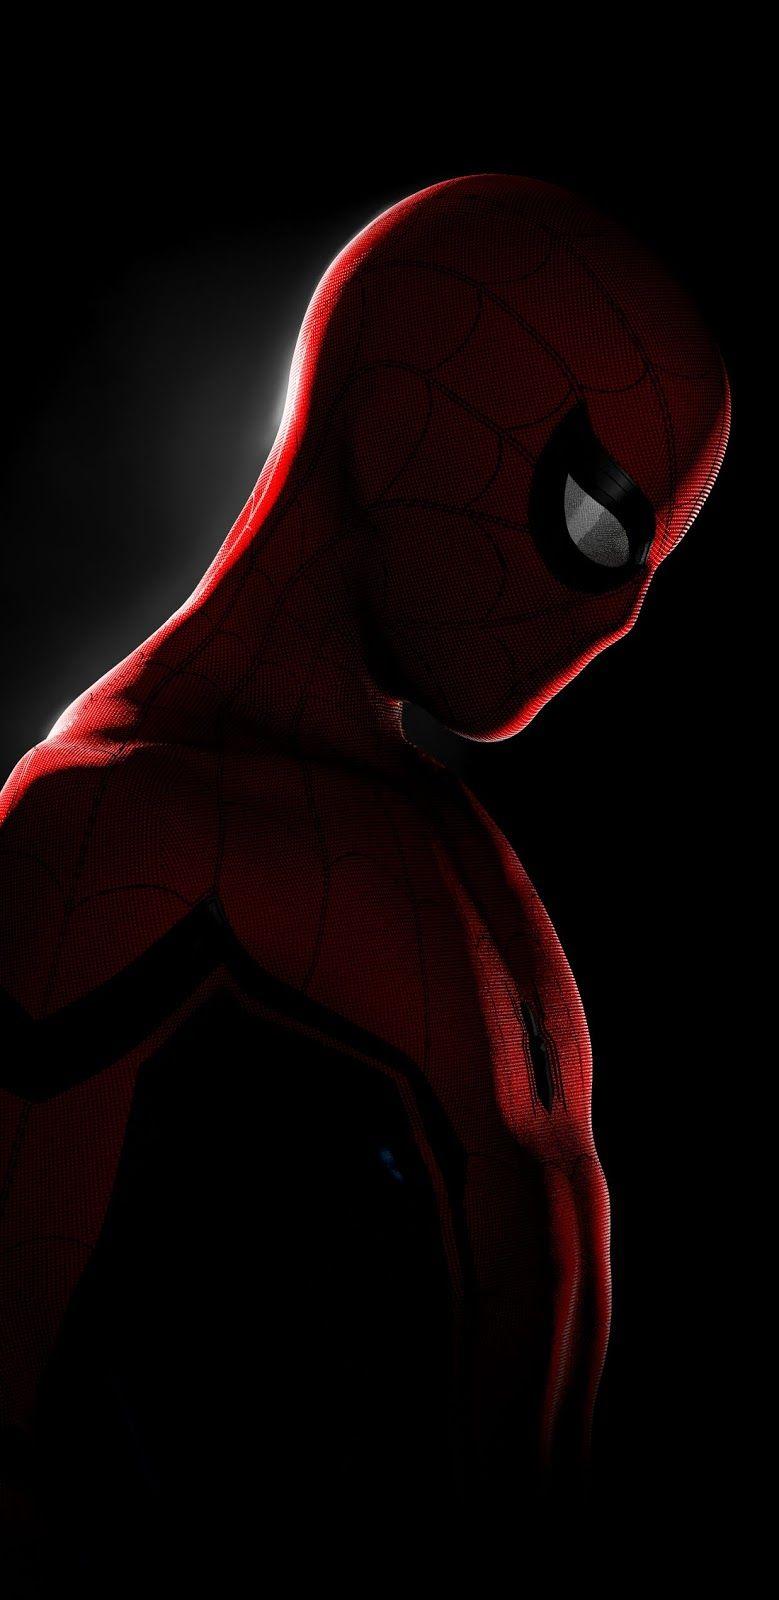 Spiderman In the Dark. Marvel wallpaper, Marvel phone wallpaper, Marvel iphone wallpaper